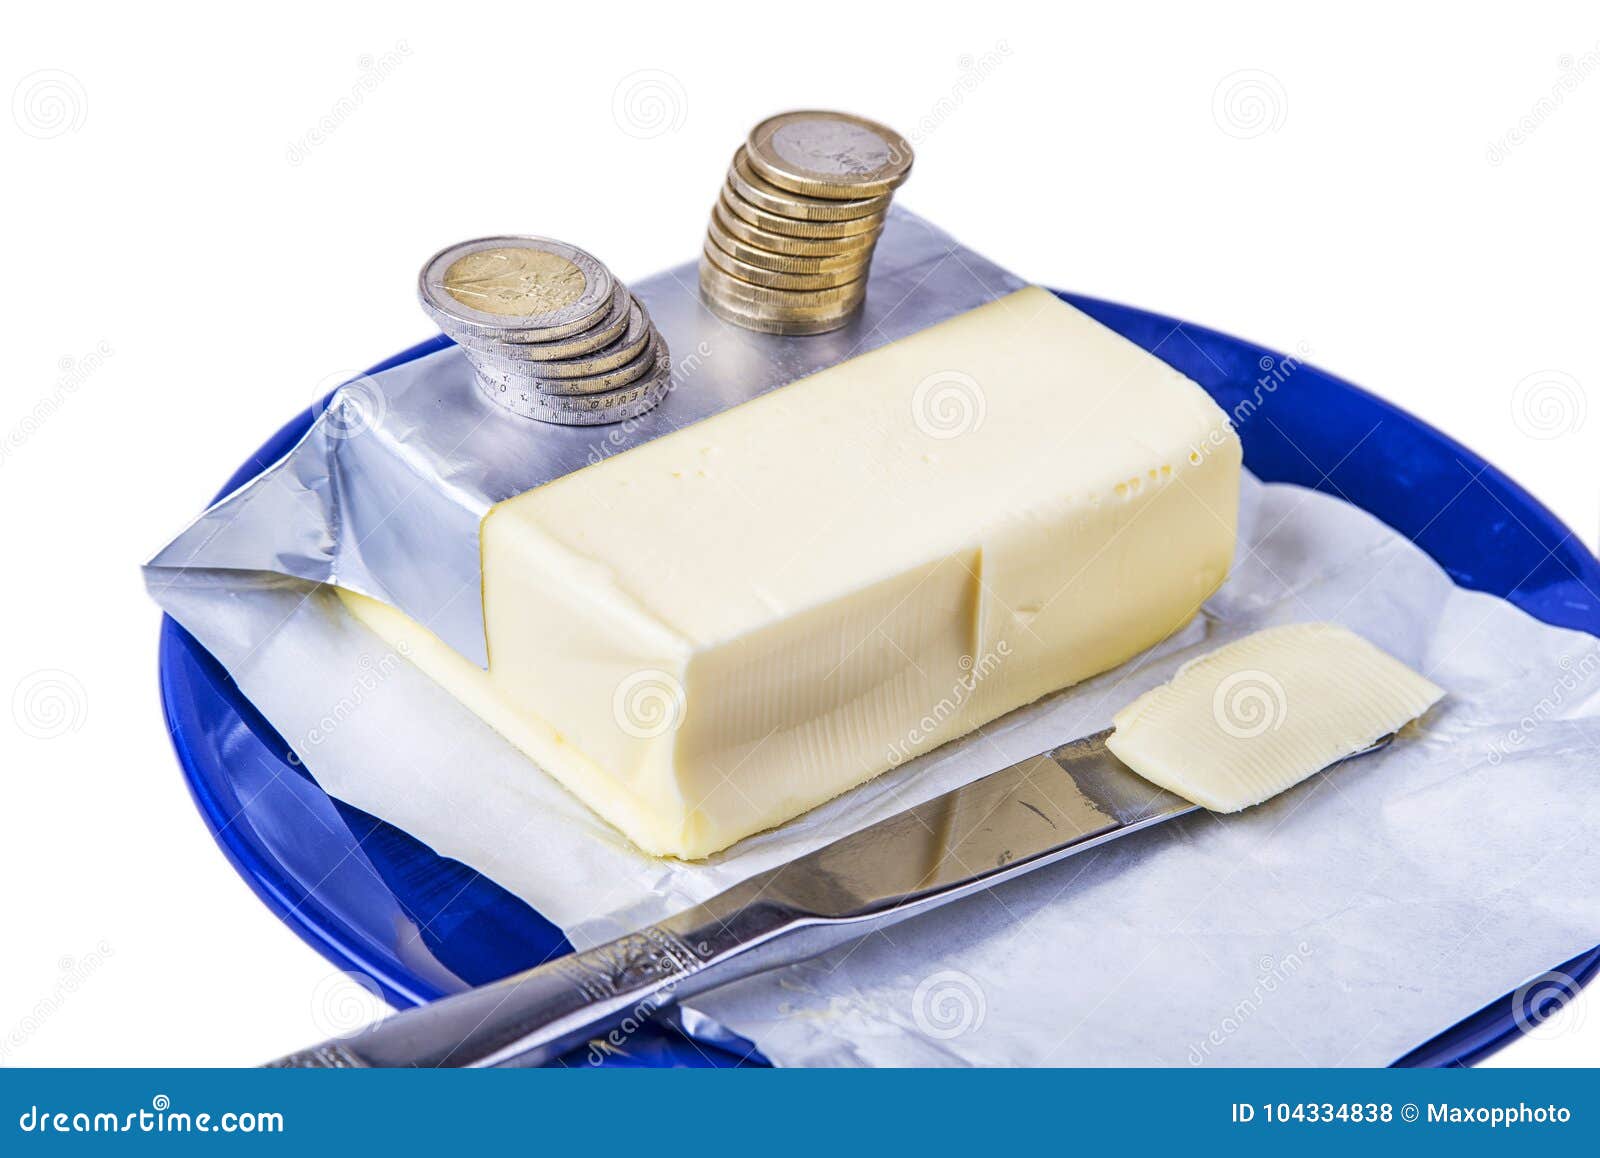 butter coin investuoti kriptovaliut dabar